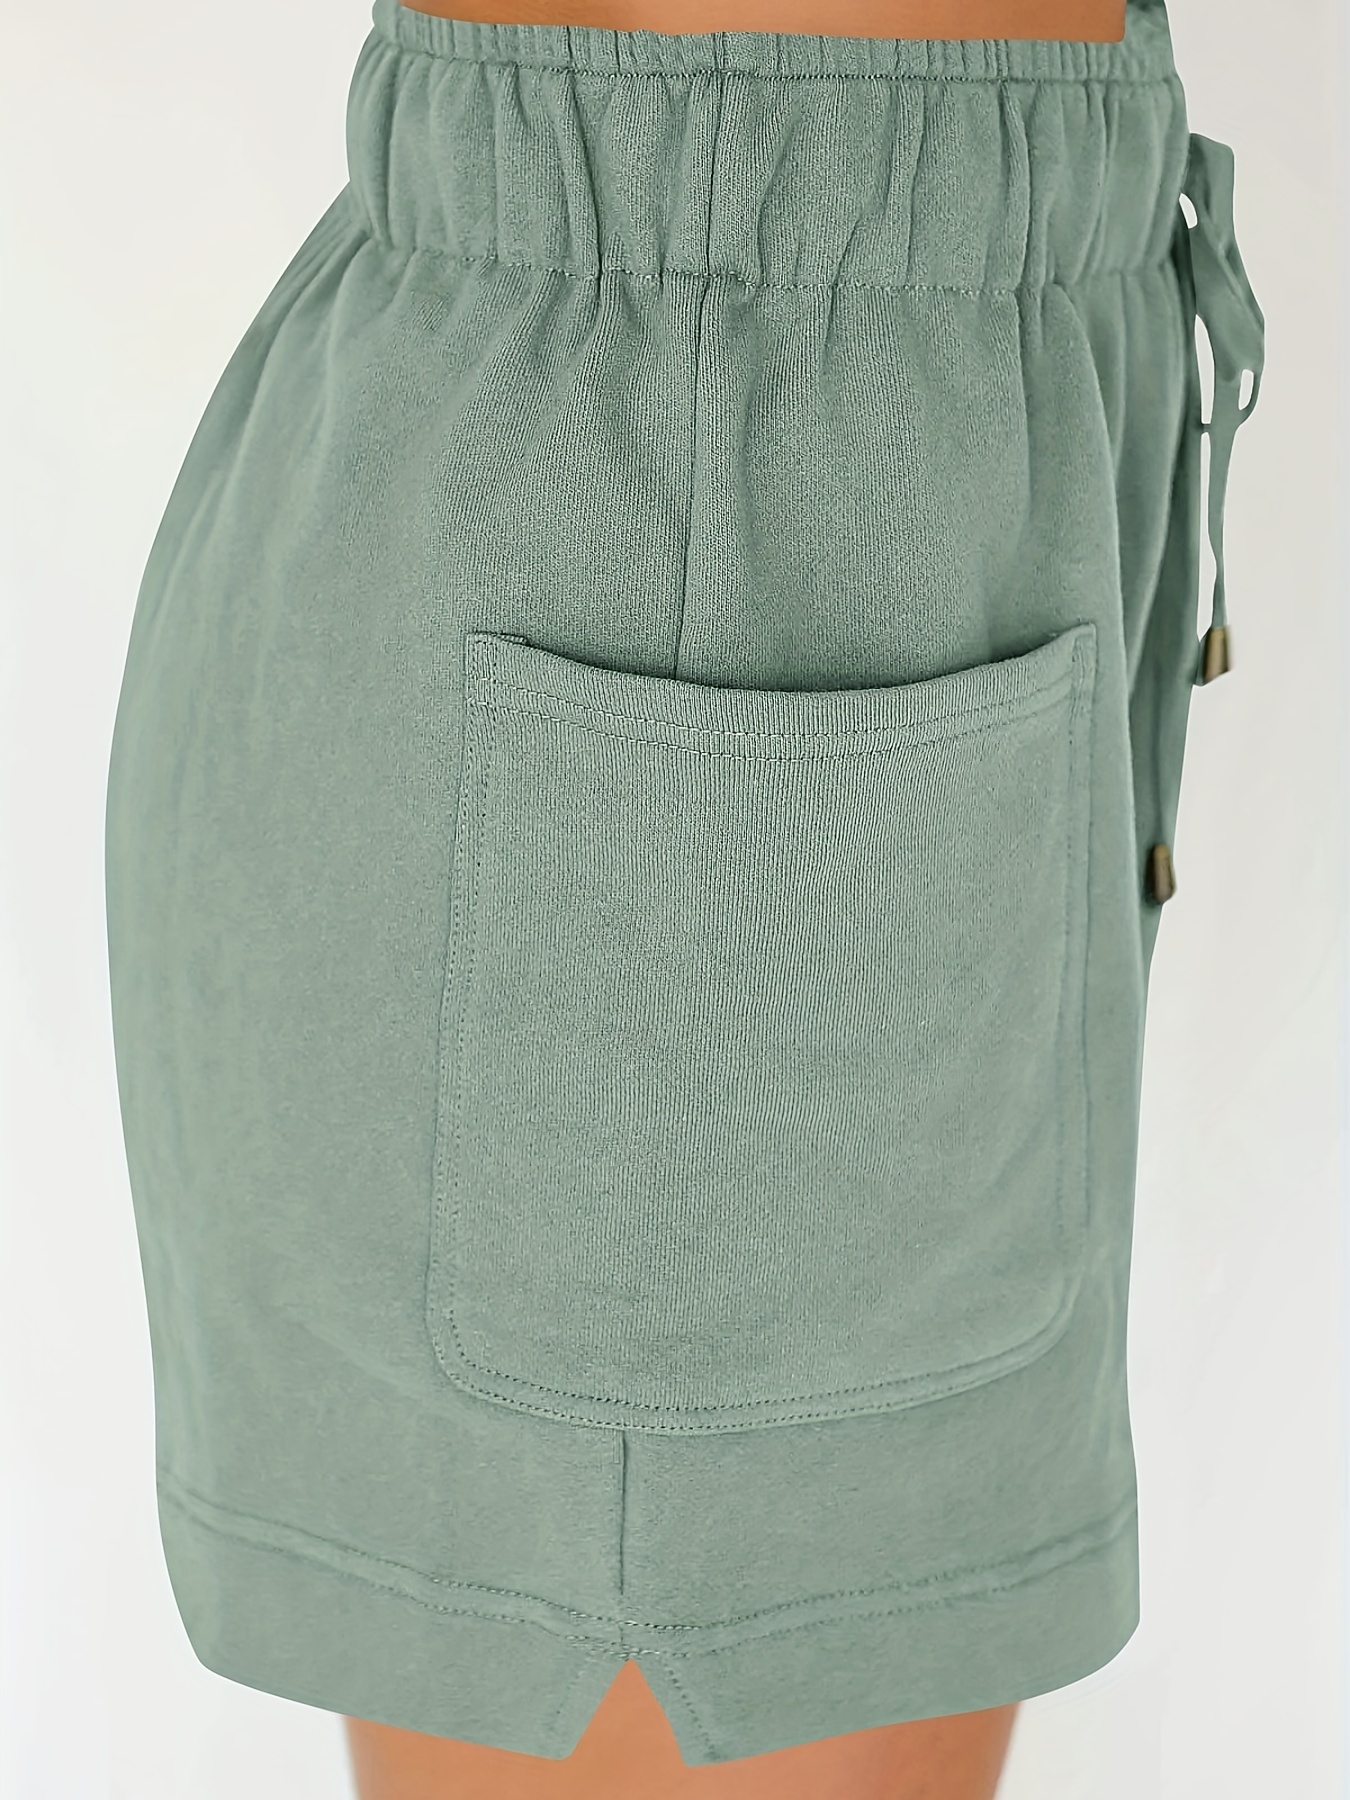 Elastic Waist Drawstring Shorts, Casual Solid Summer Shorts With Pockets,  Women's Clothing